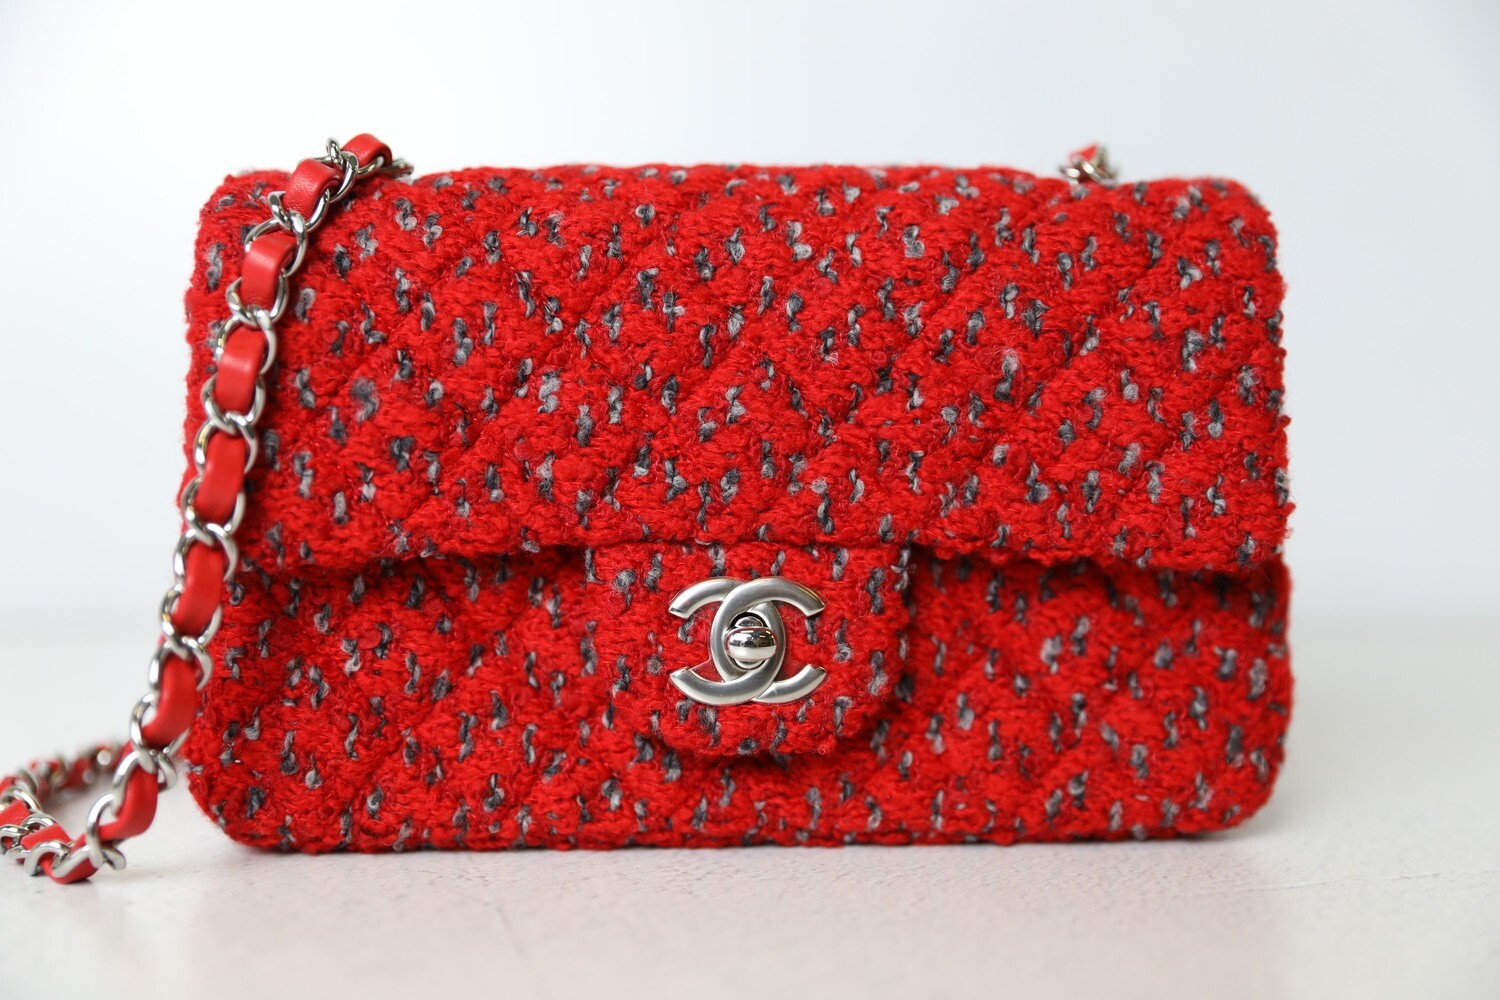 Chanel Mini Rectangular Classic Single Flap Bag